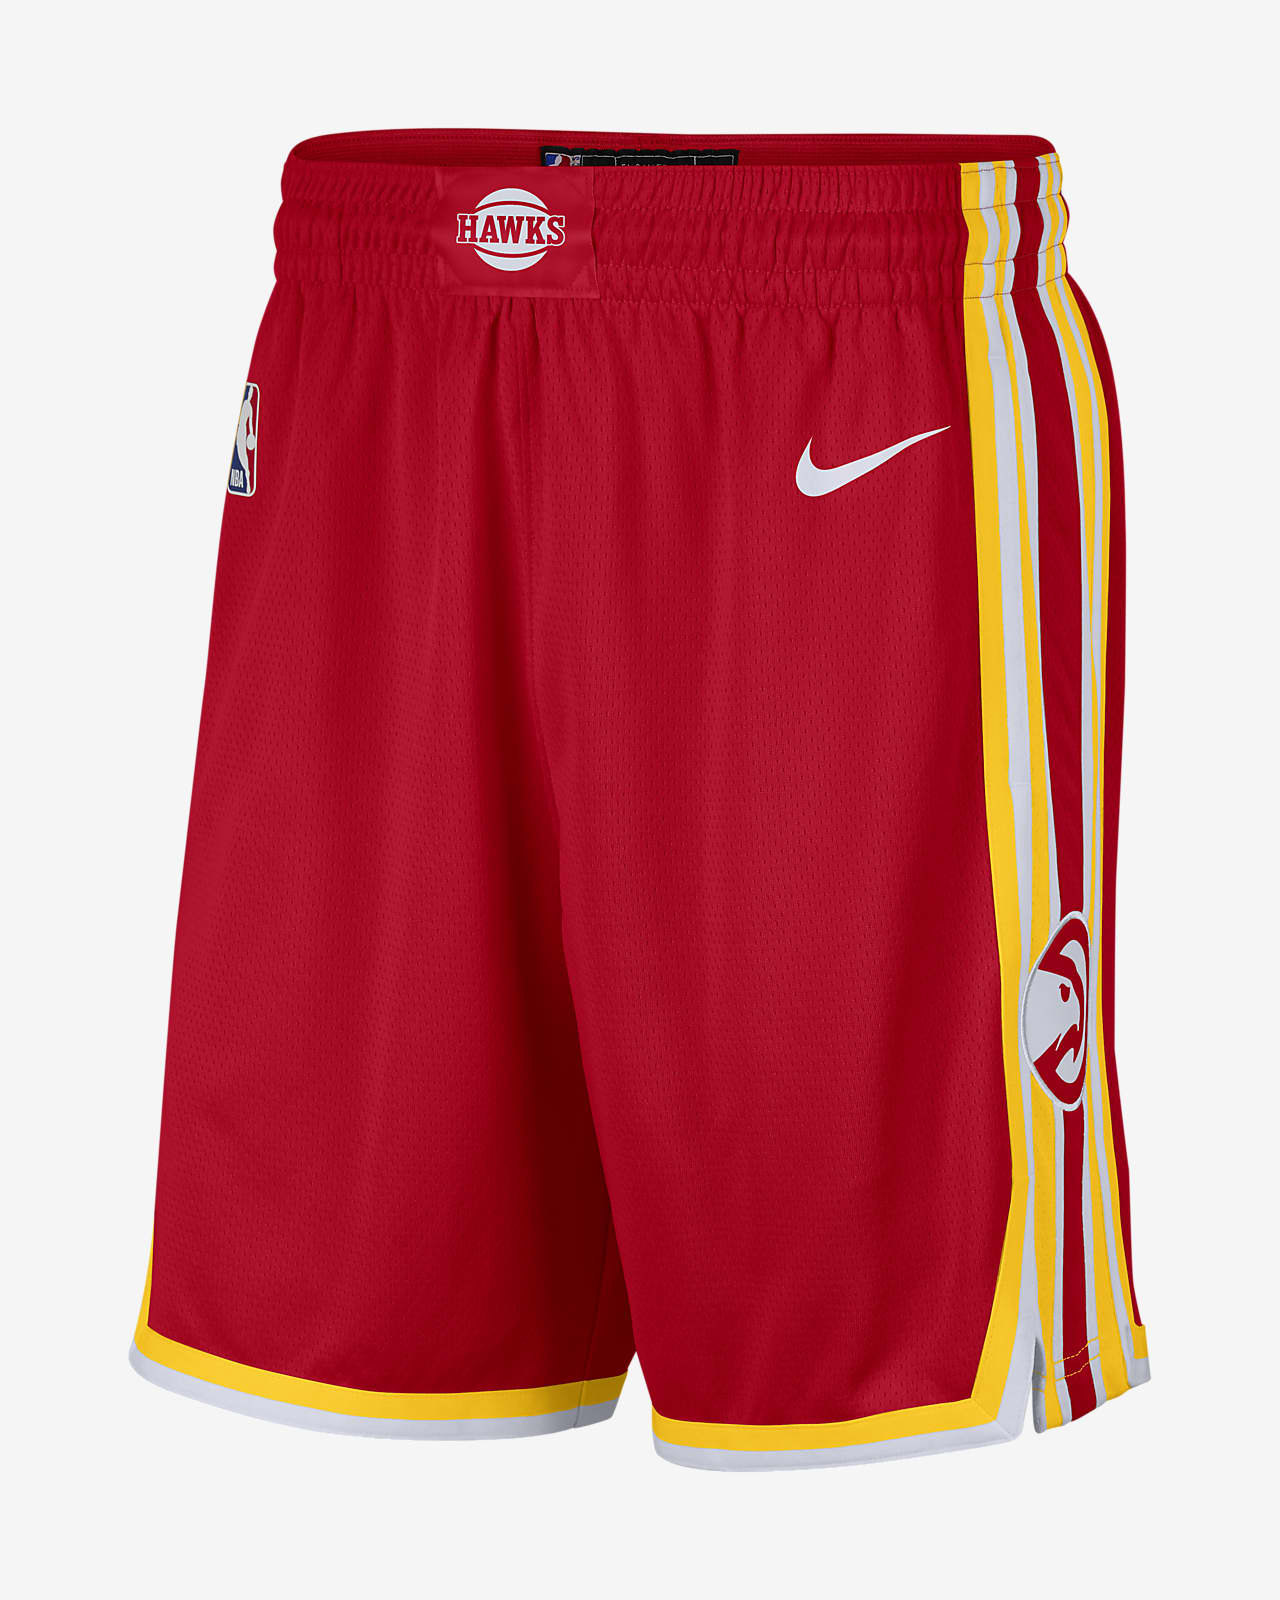 Hawks Icon Edition 2020 Nike NBA Swingman Shorts für Herren